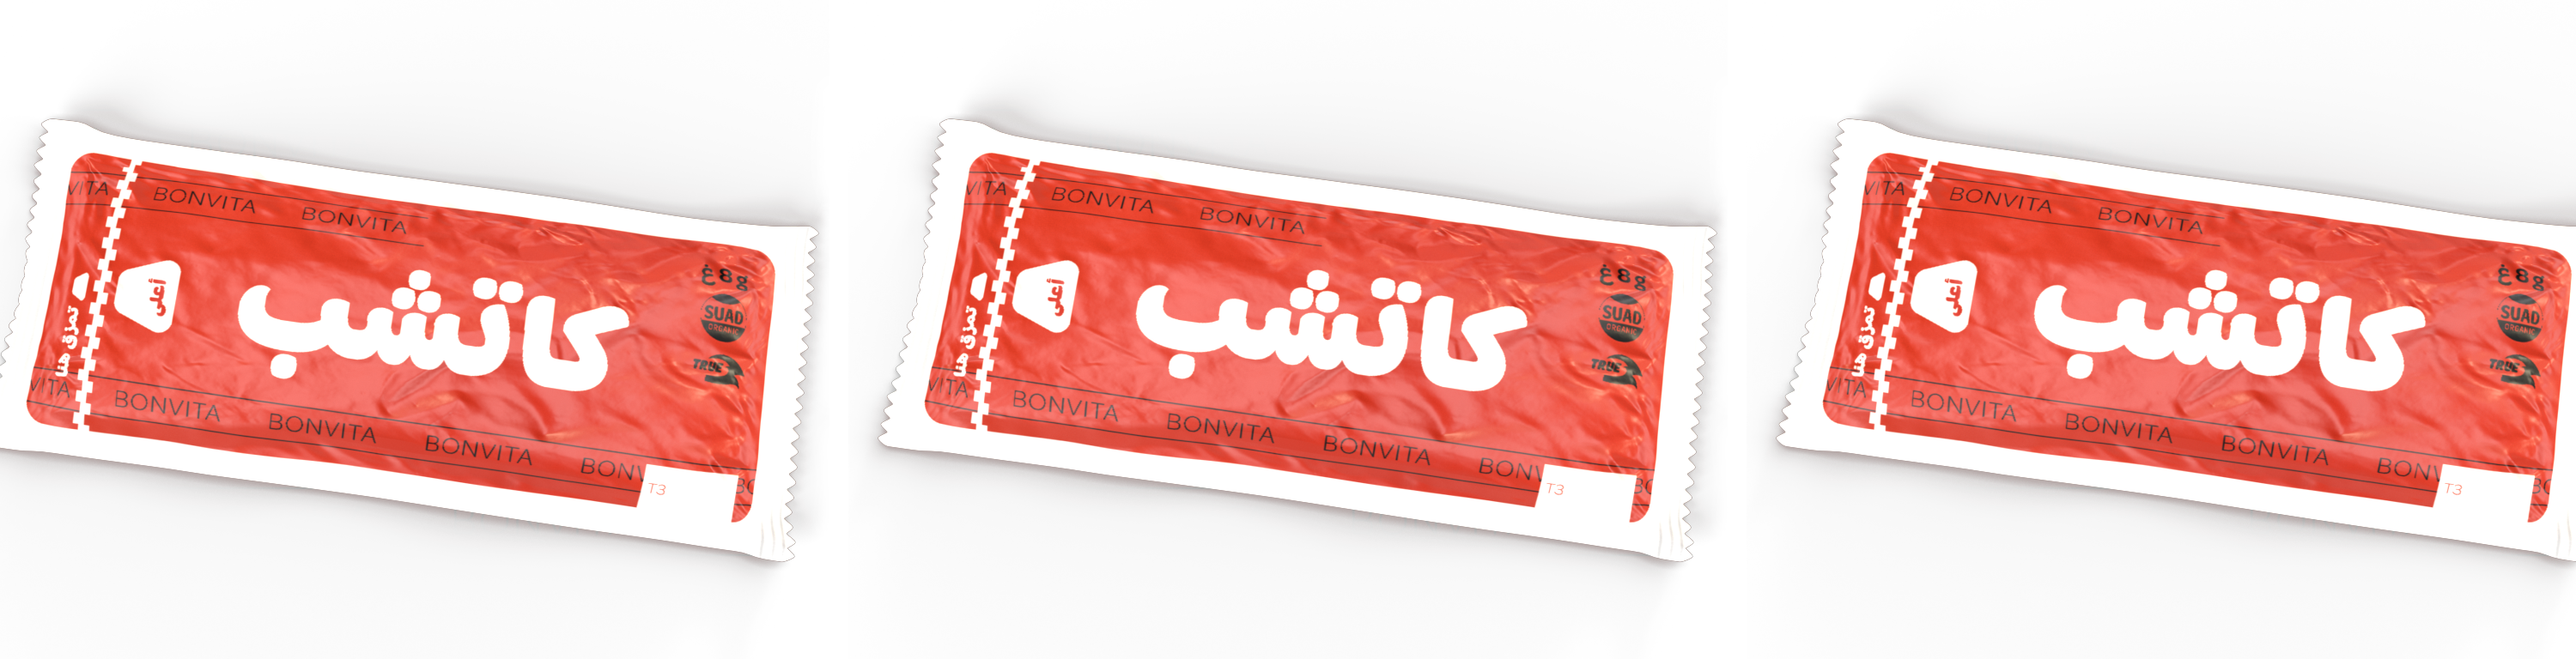 Omnes Arabic ketchup